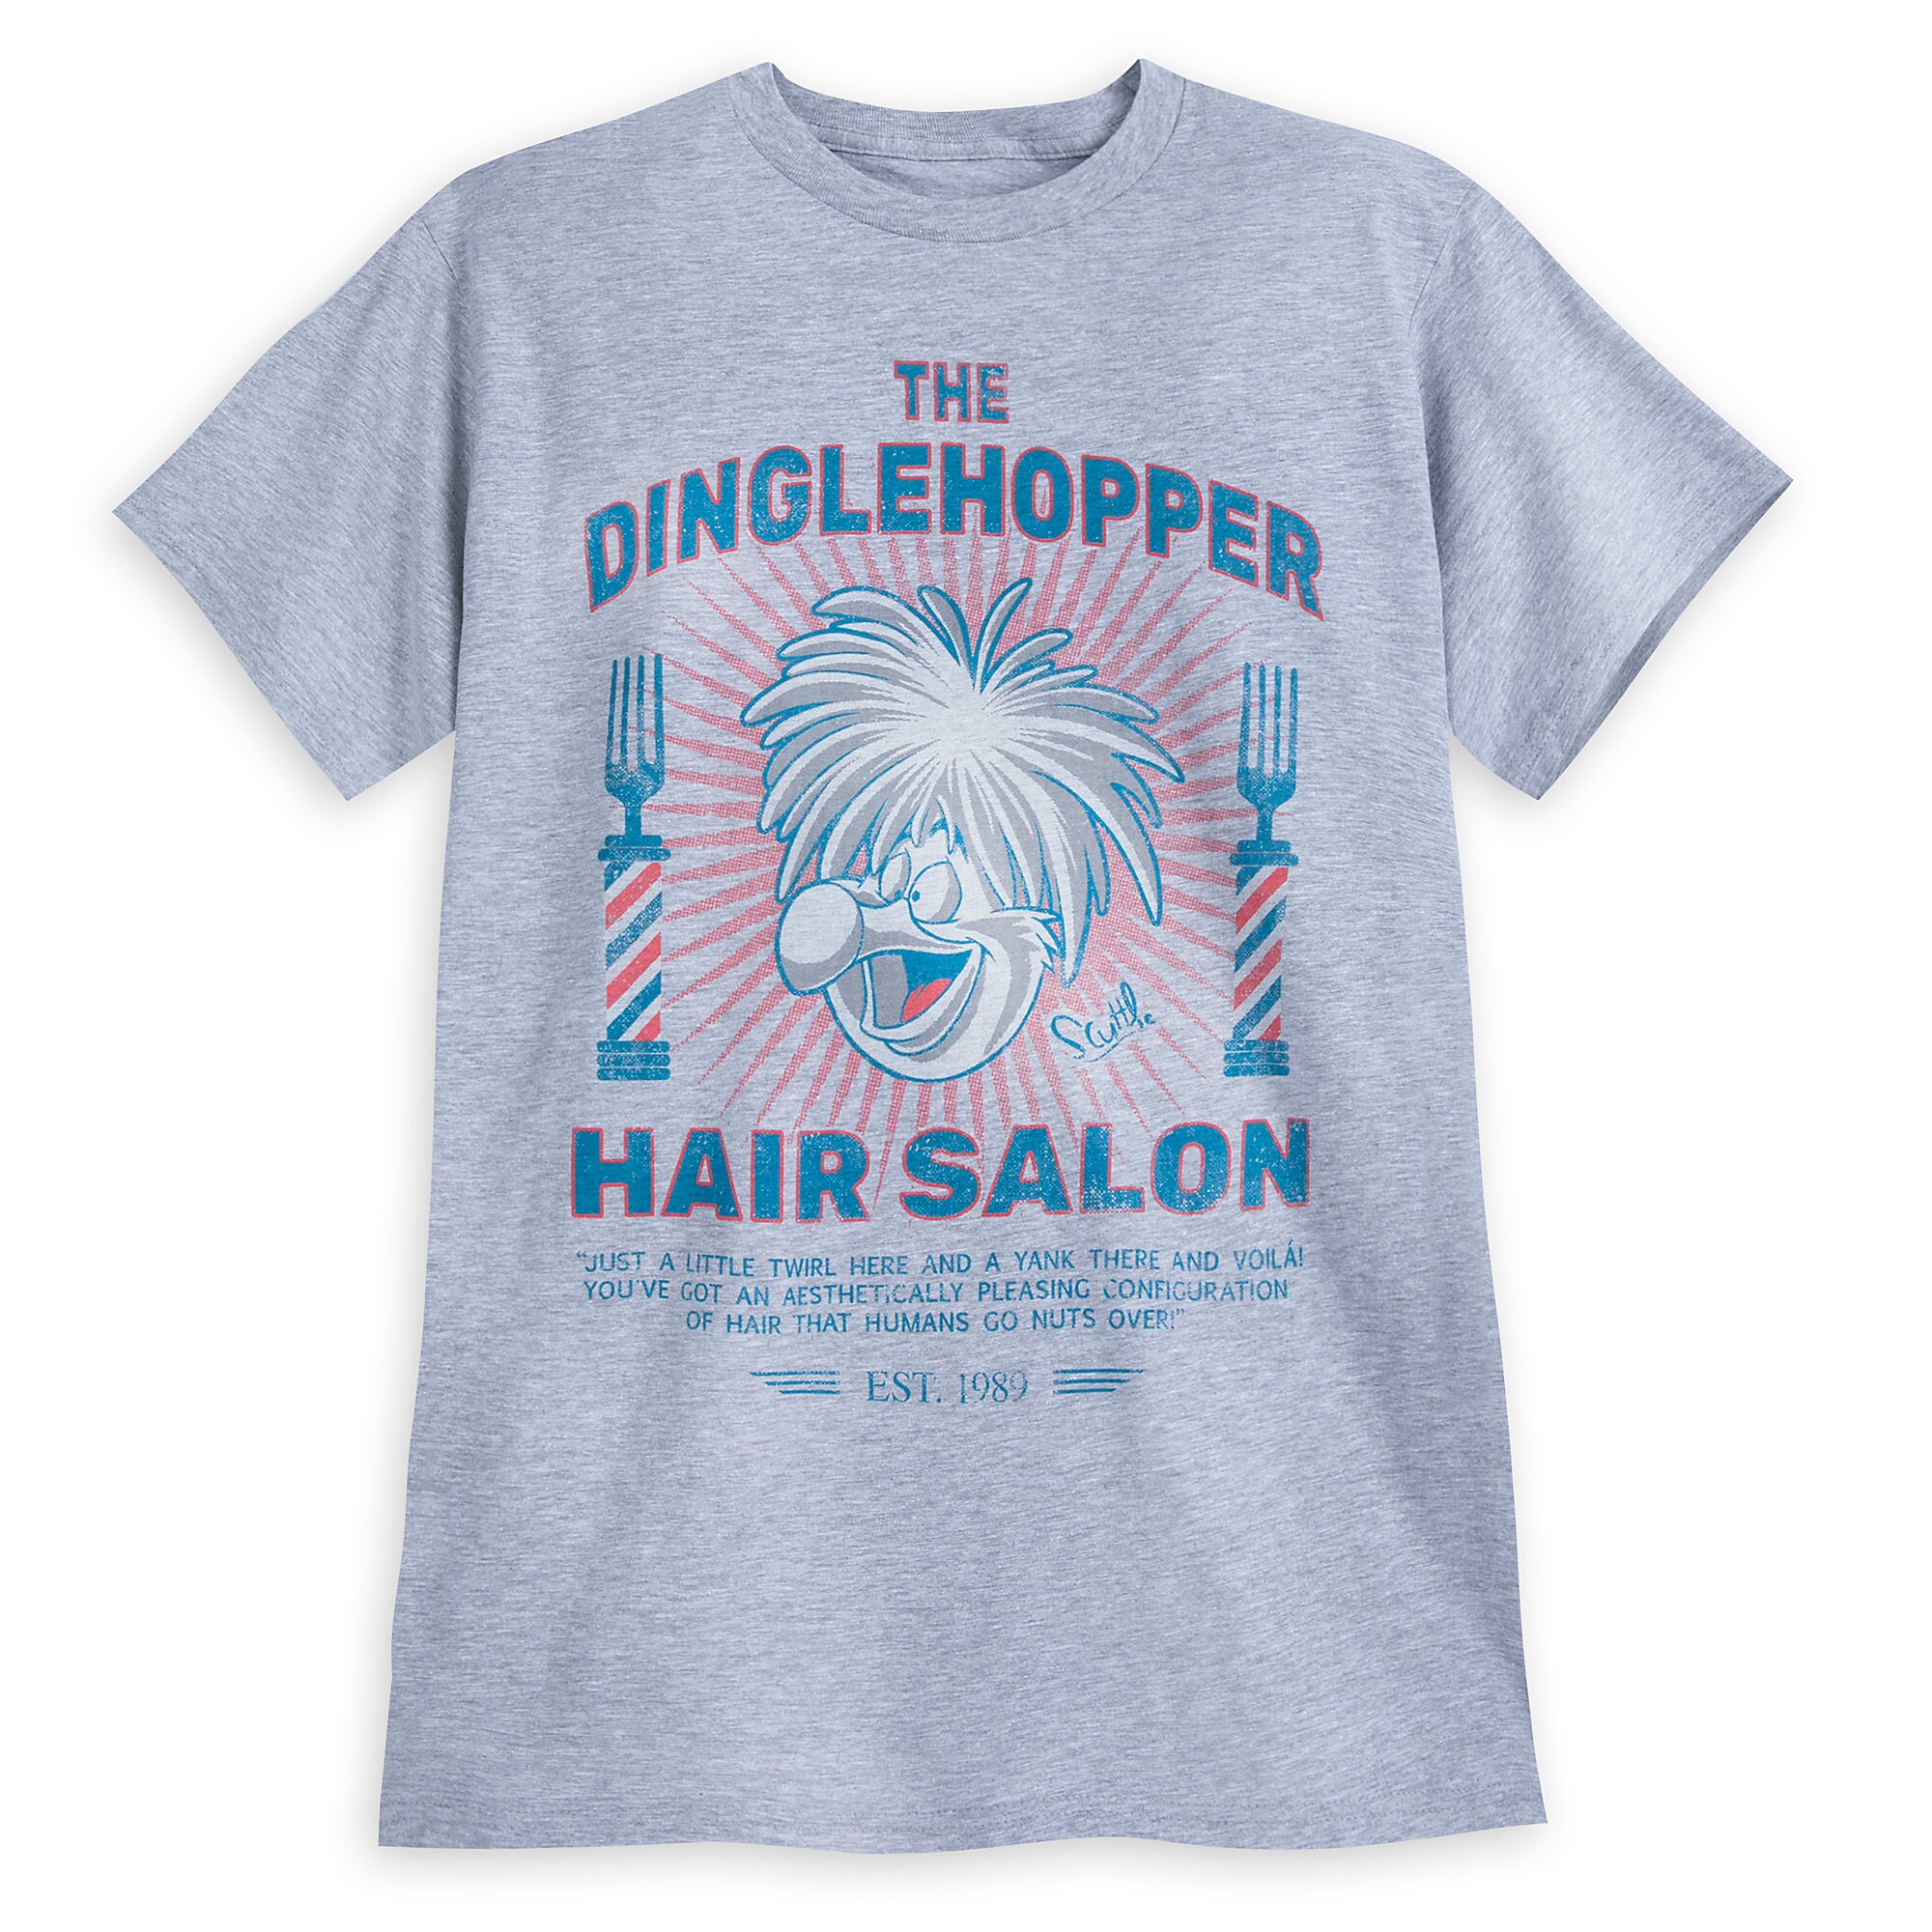 The Dinglehopper Hair Salon T-Shirt for Adults - The Little Mermaid